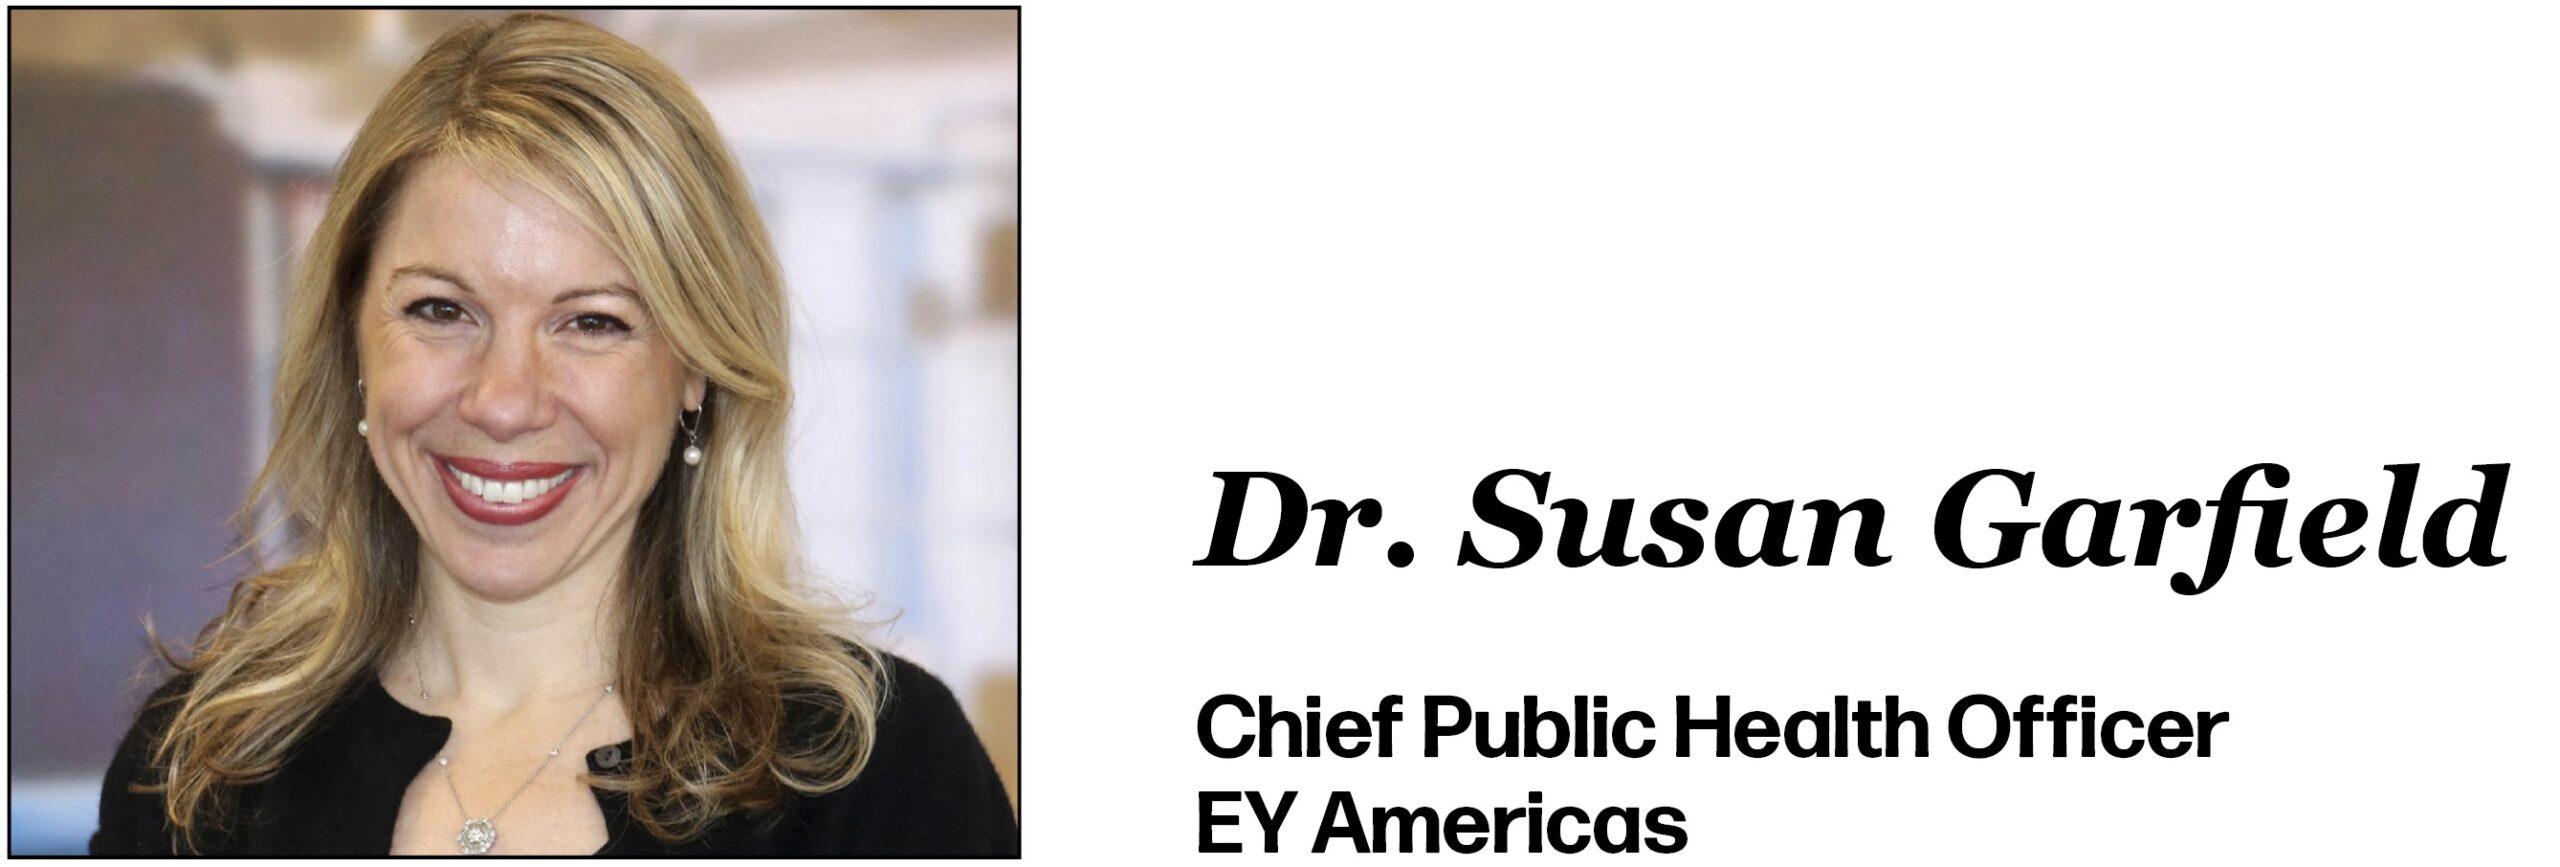 Dr. Susan Garfield Chief Public Health Officer EY Americas 